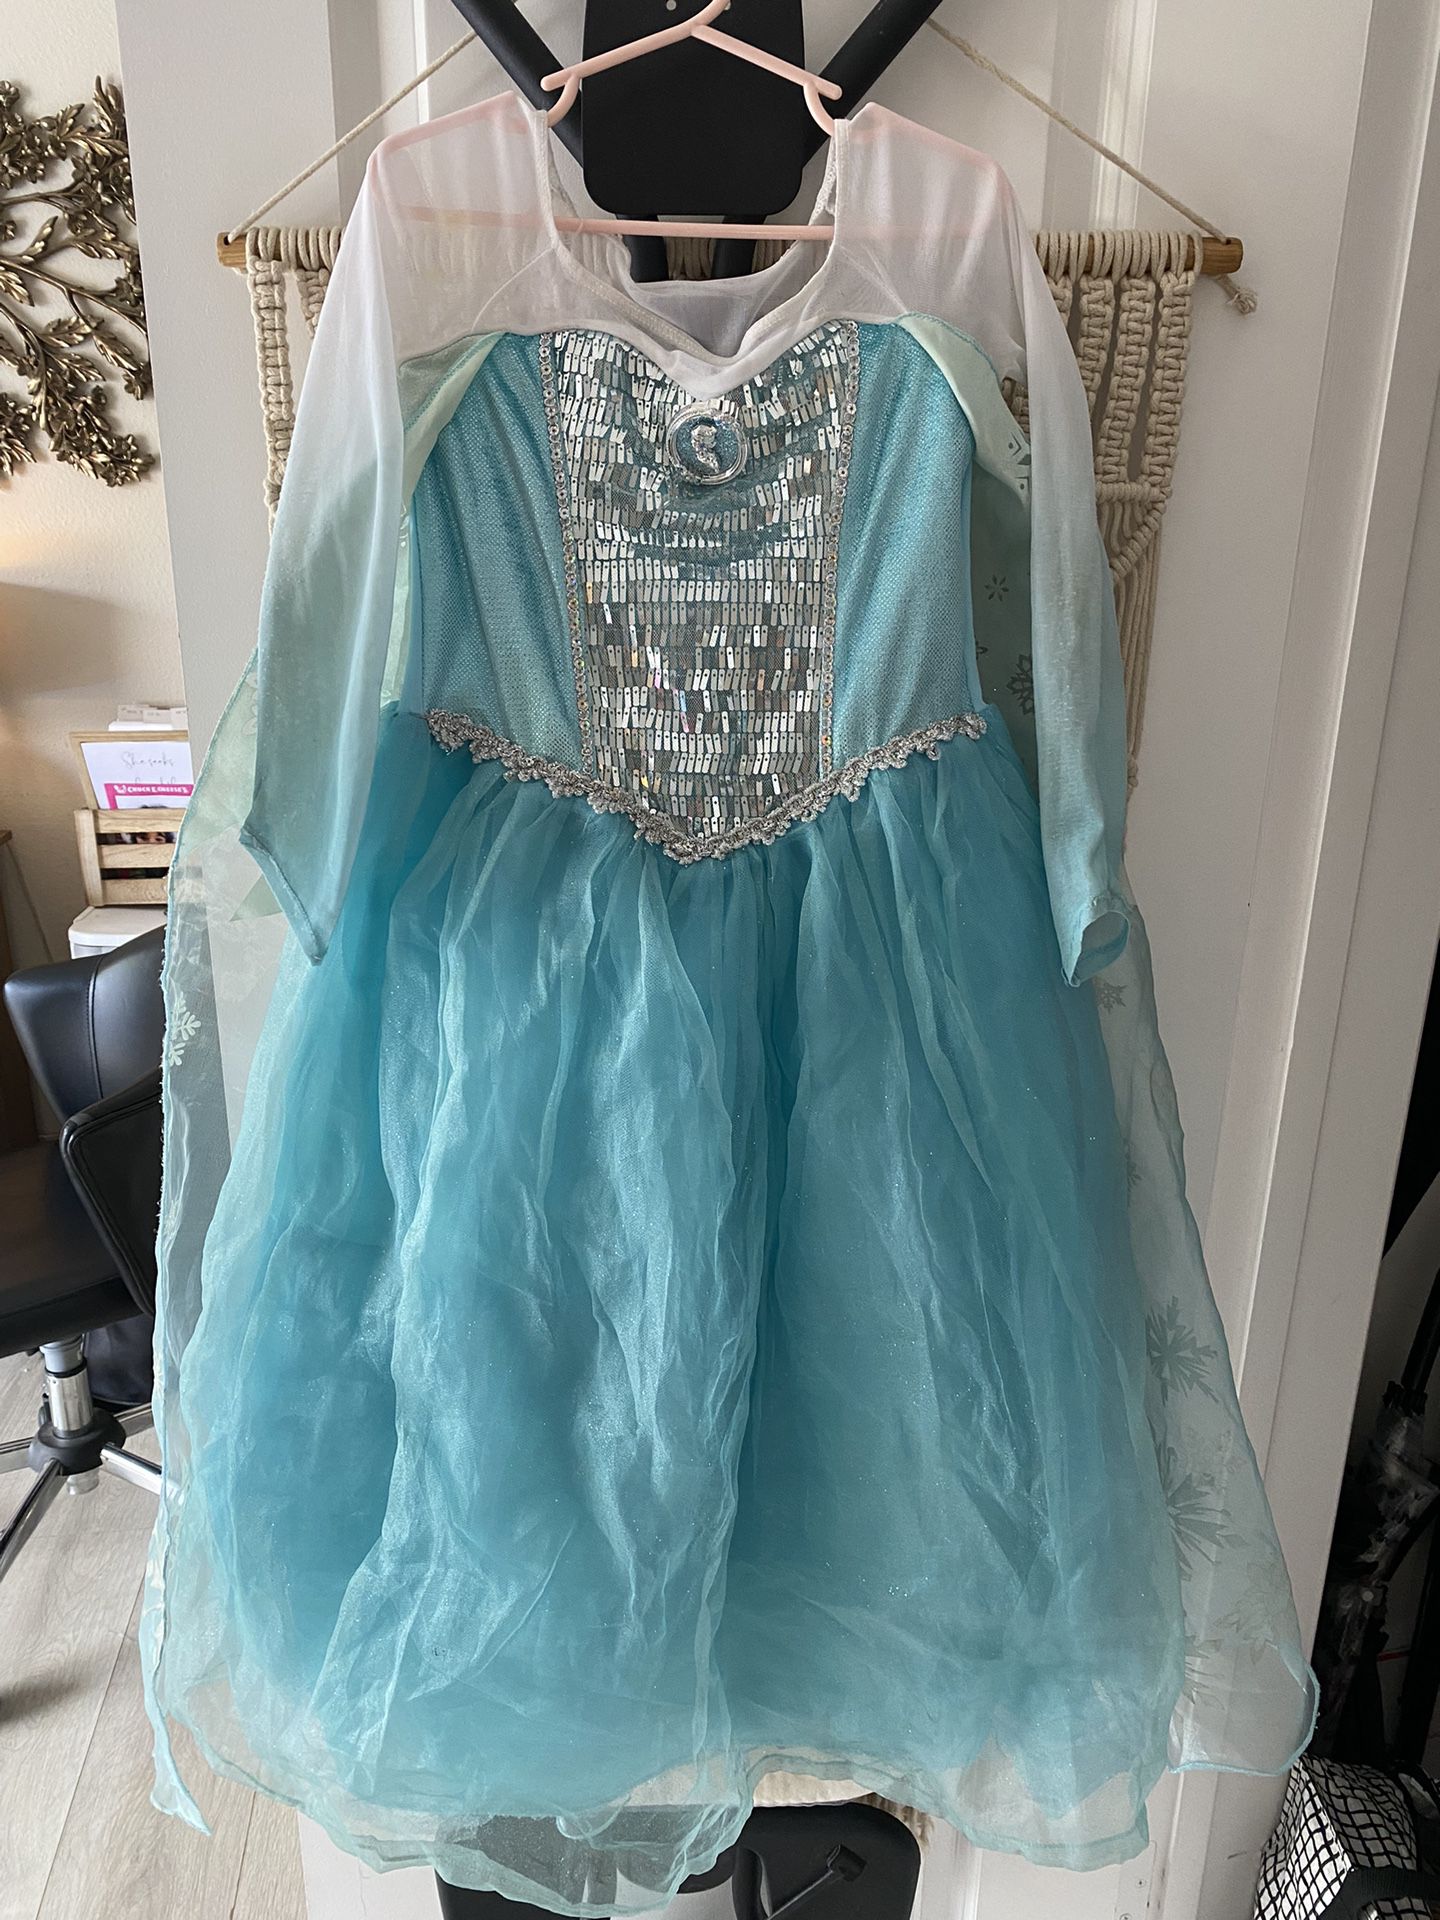 Frozen Elsa Princess Dress Size 5/6